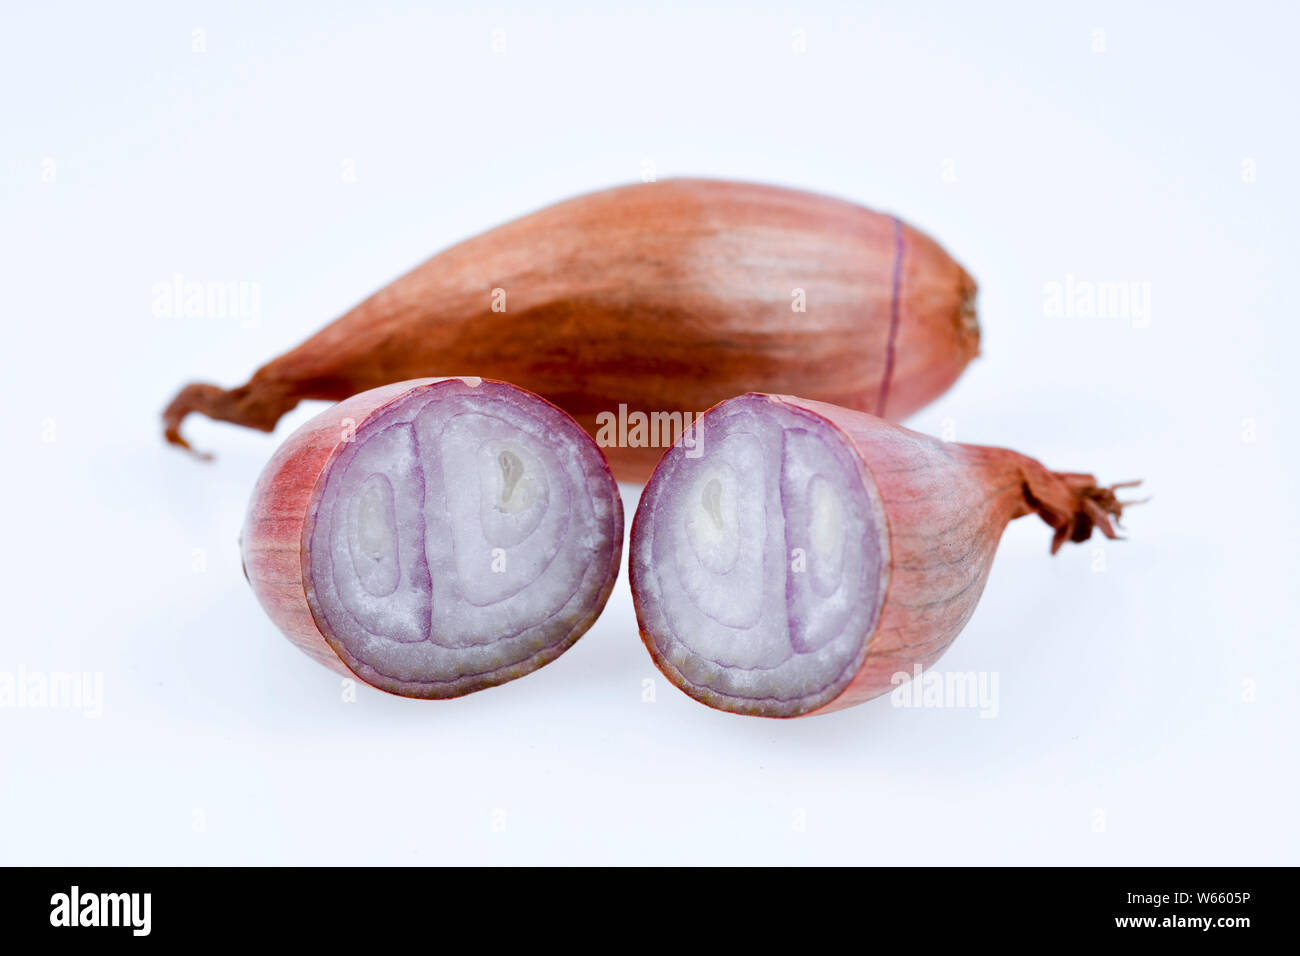 shallot, Allium ascalonicum Stock Photo